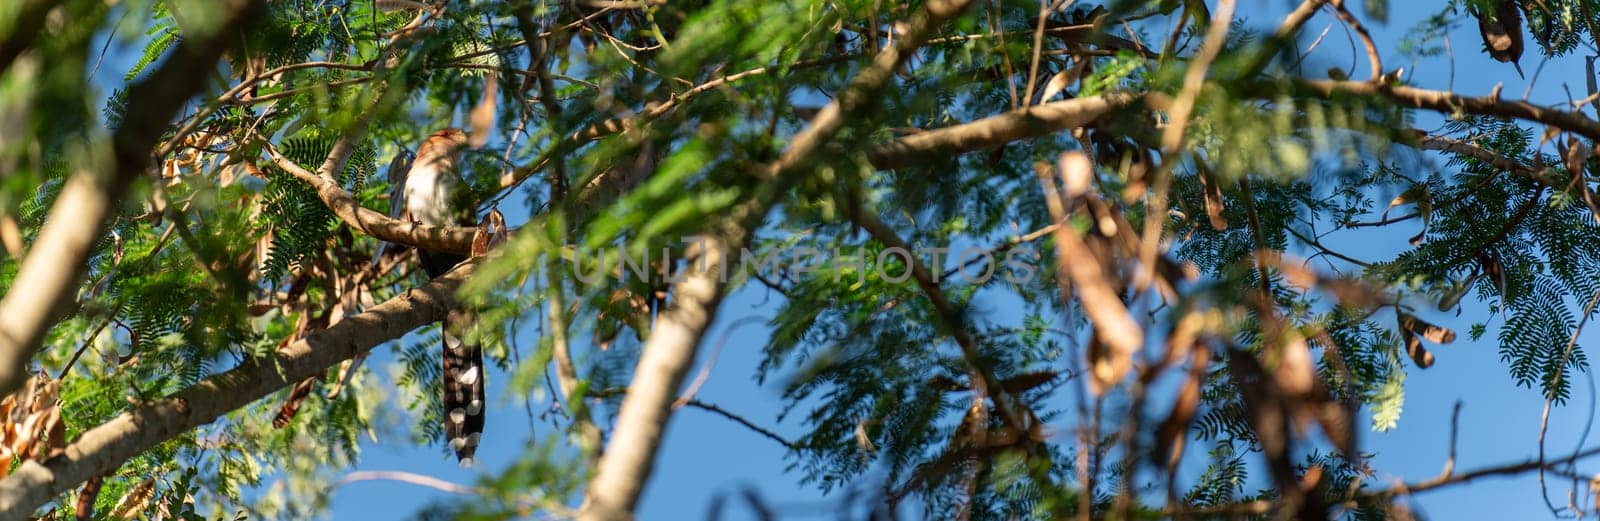 Channel-billed Cuckoo Perched Amongst Green Leaves by FerradalFCG